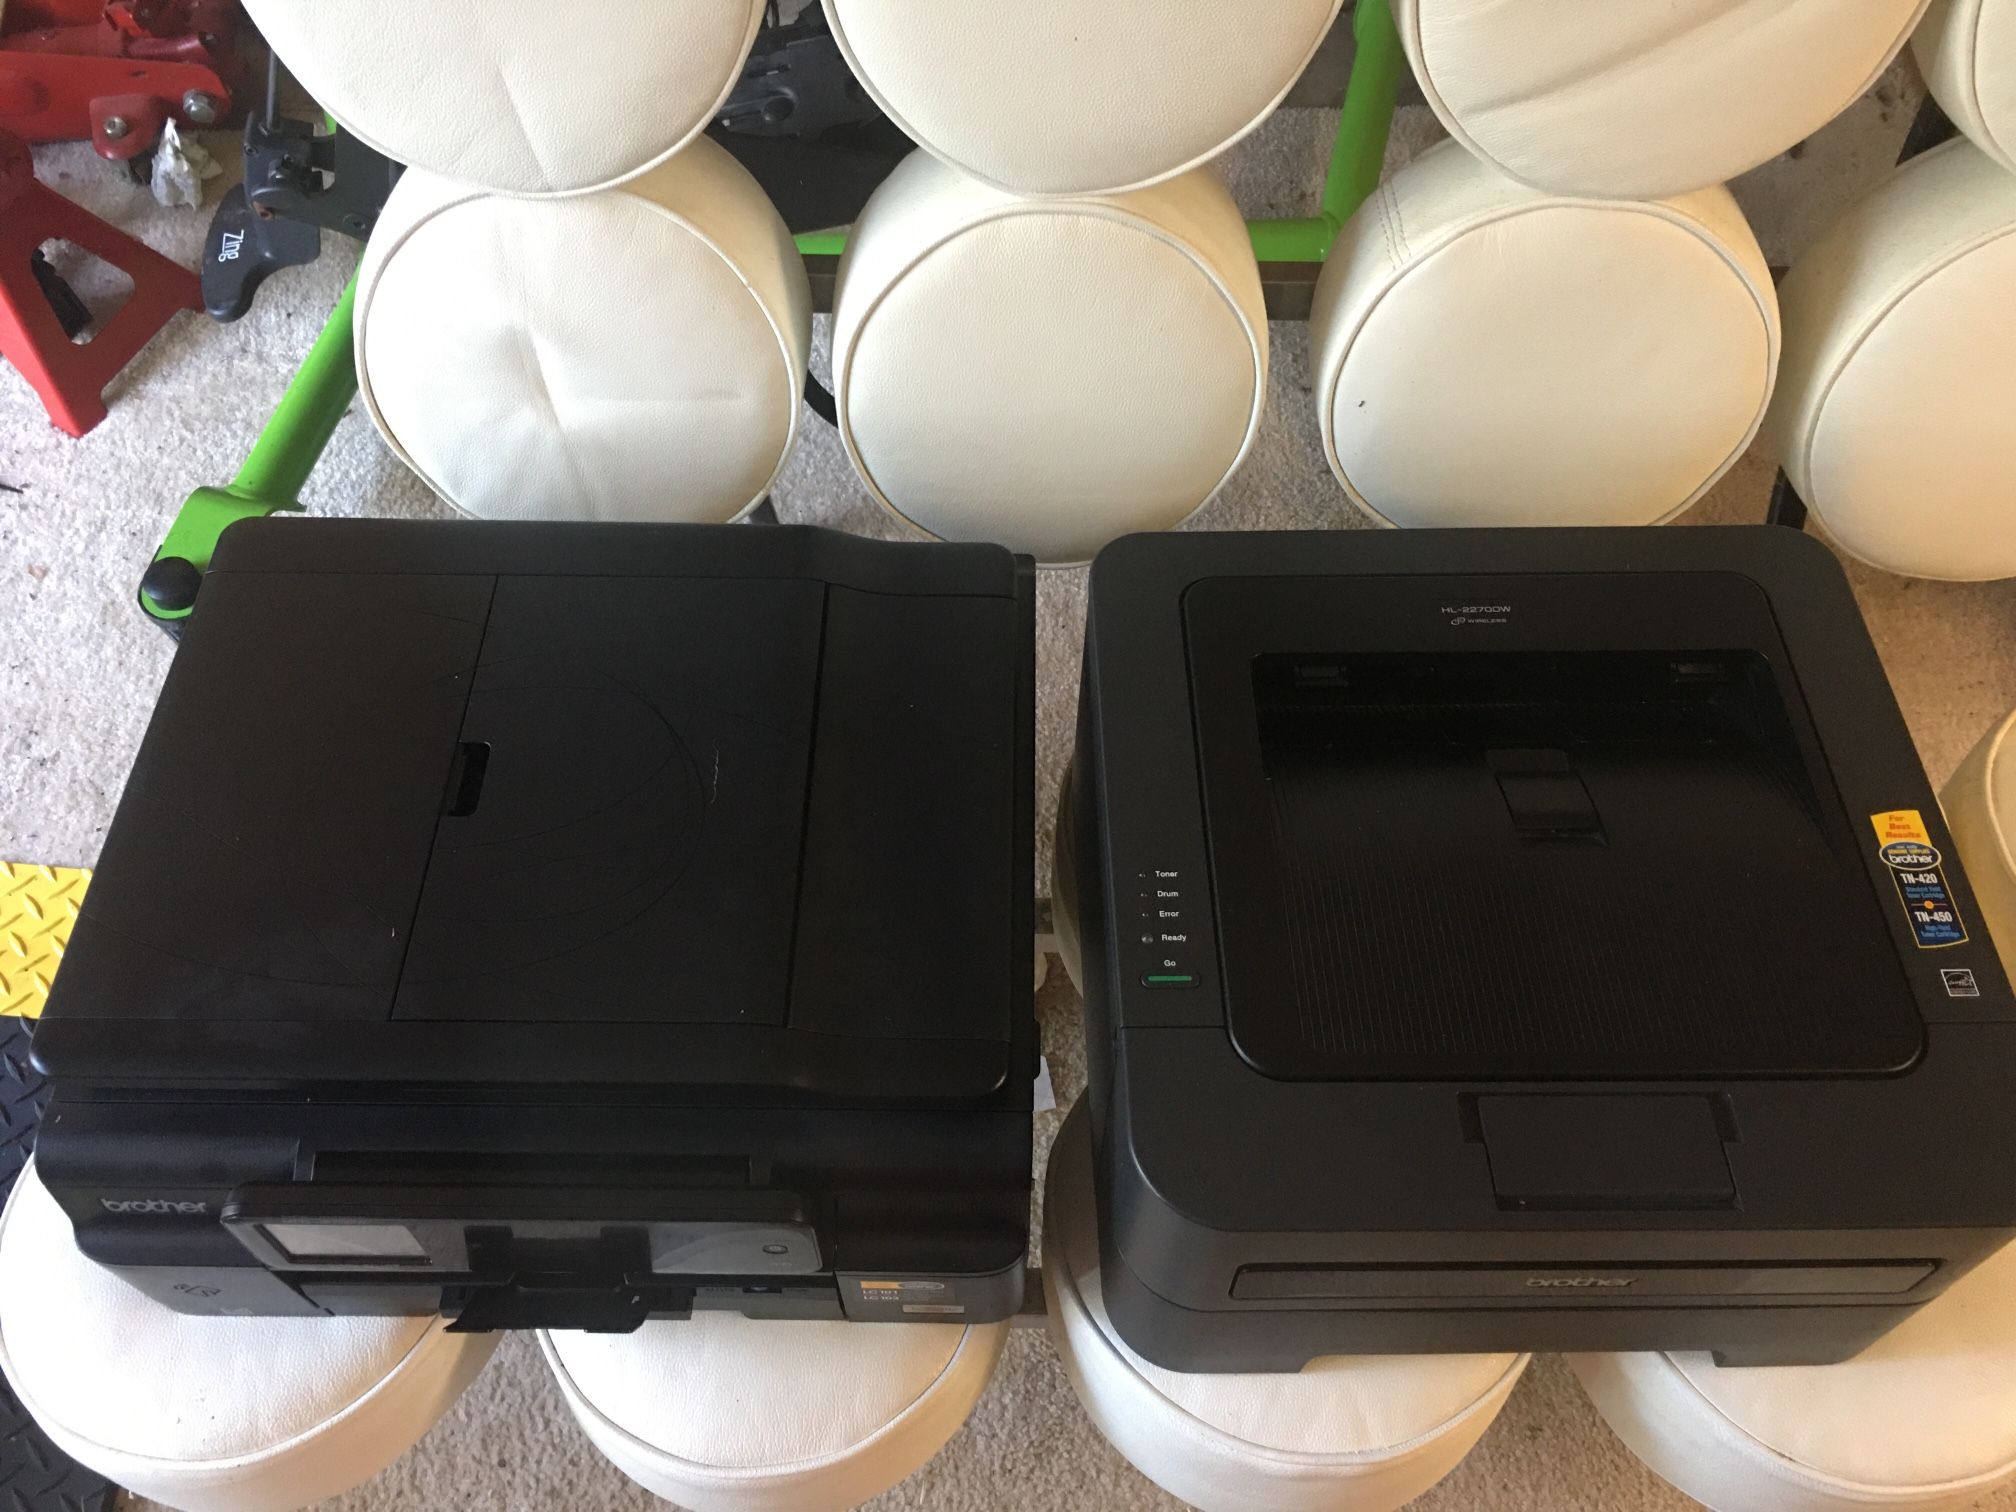 2 Printers -working 